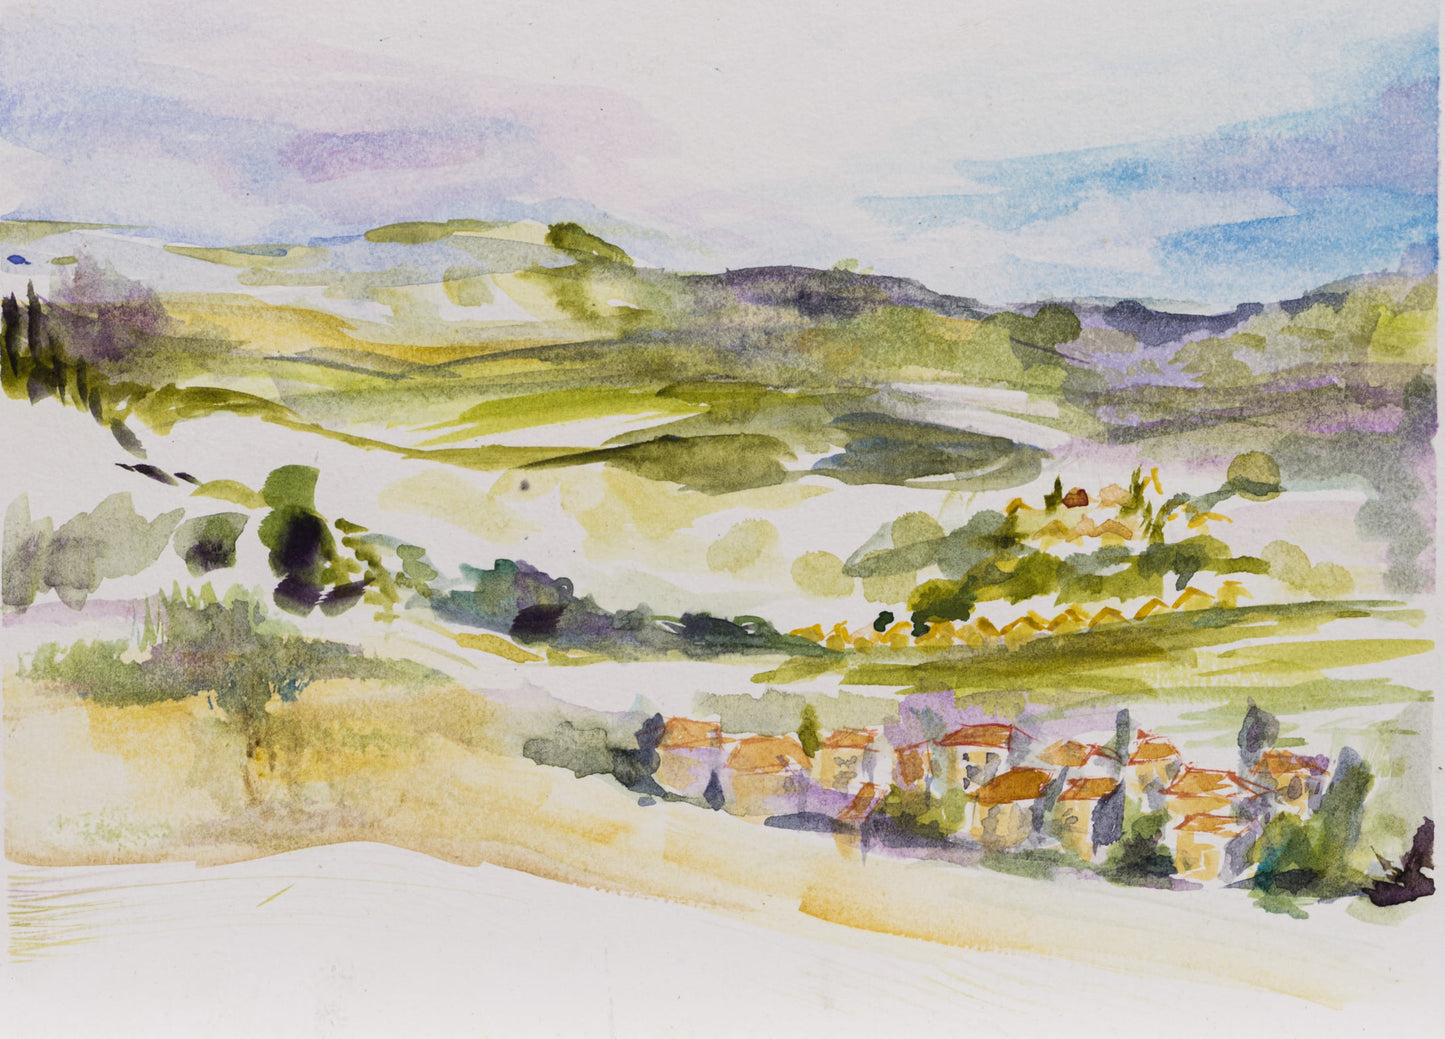 Jerusalem Hills in Plein Air Watercolor